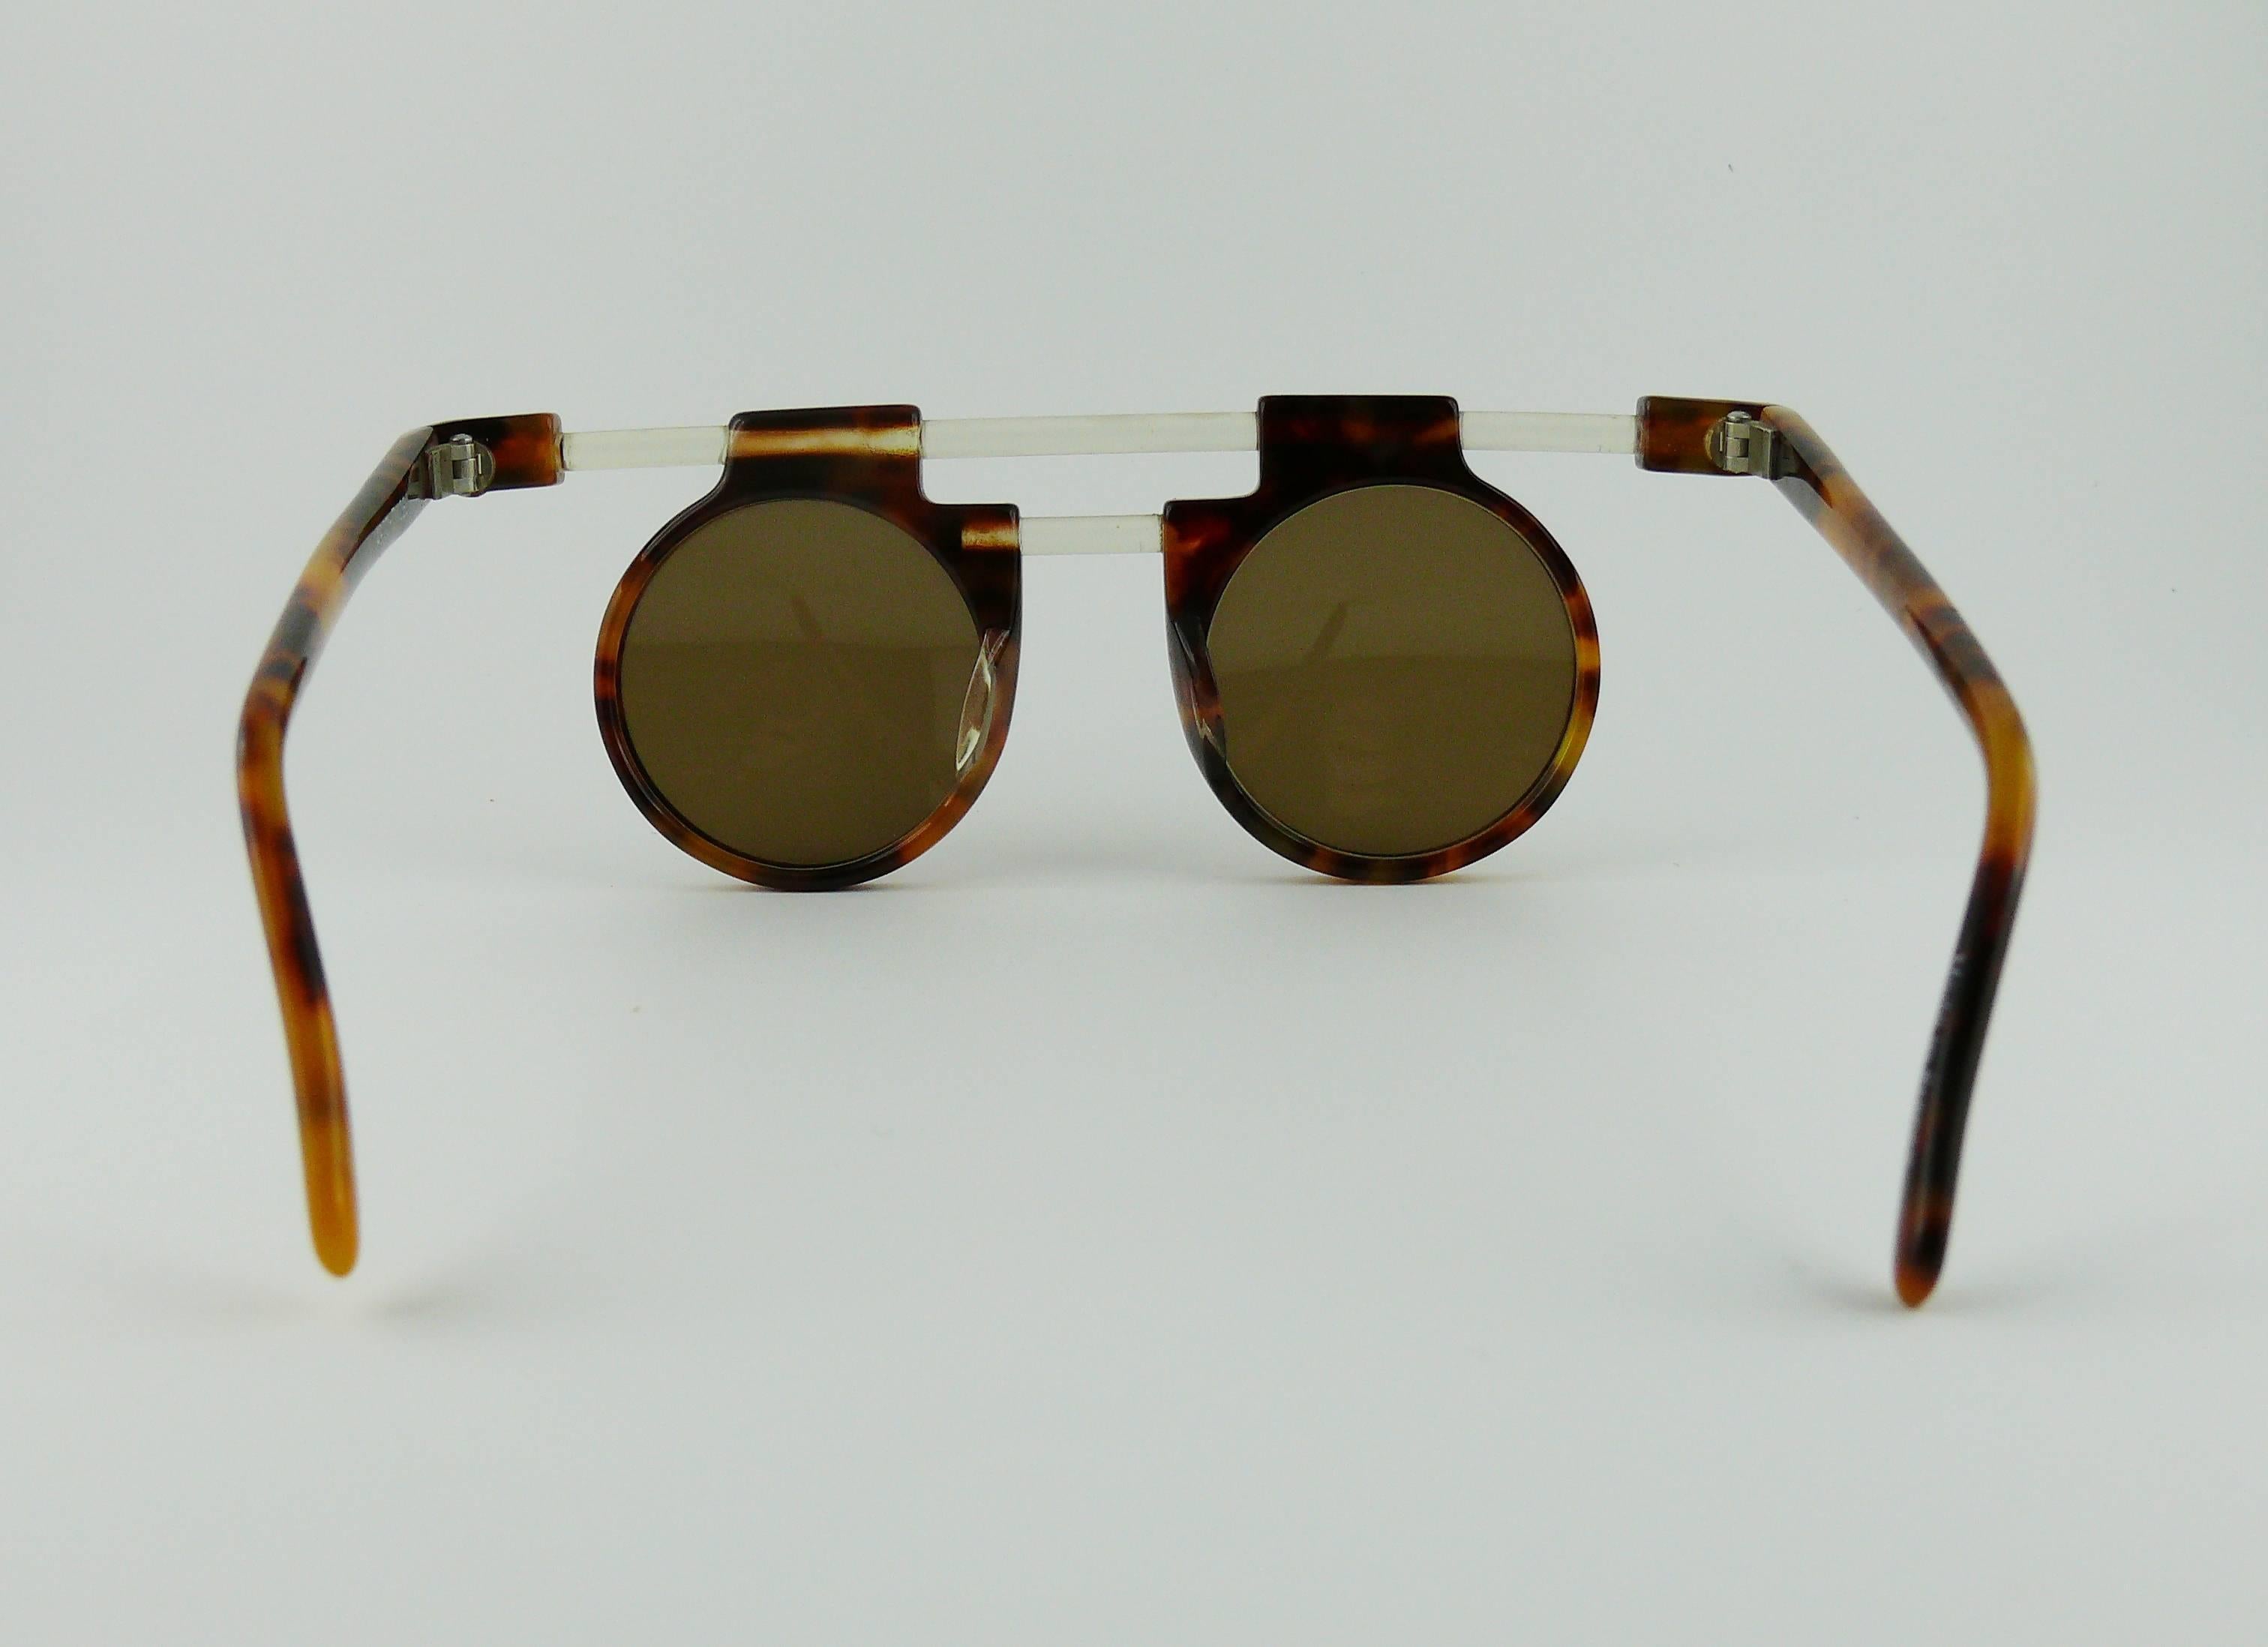 Jean-Charles de Castelbajac Vintage Modernist Sunglasses 1